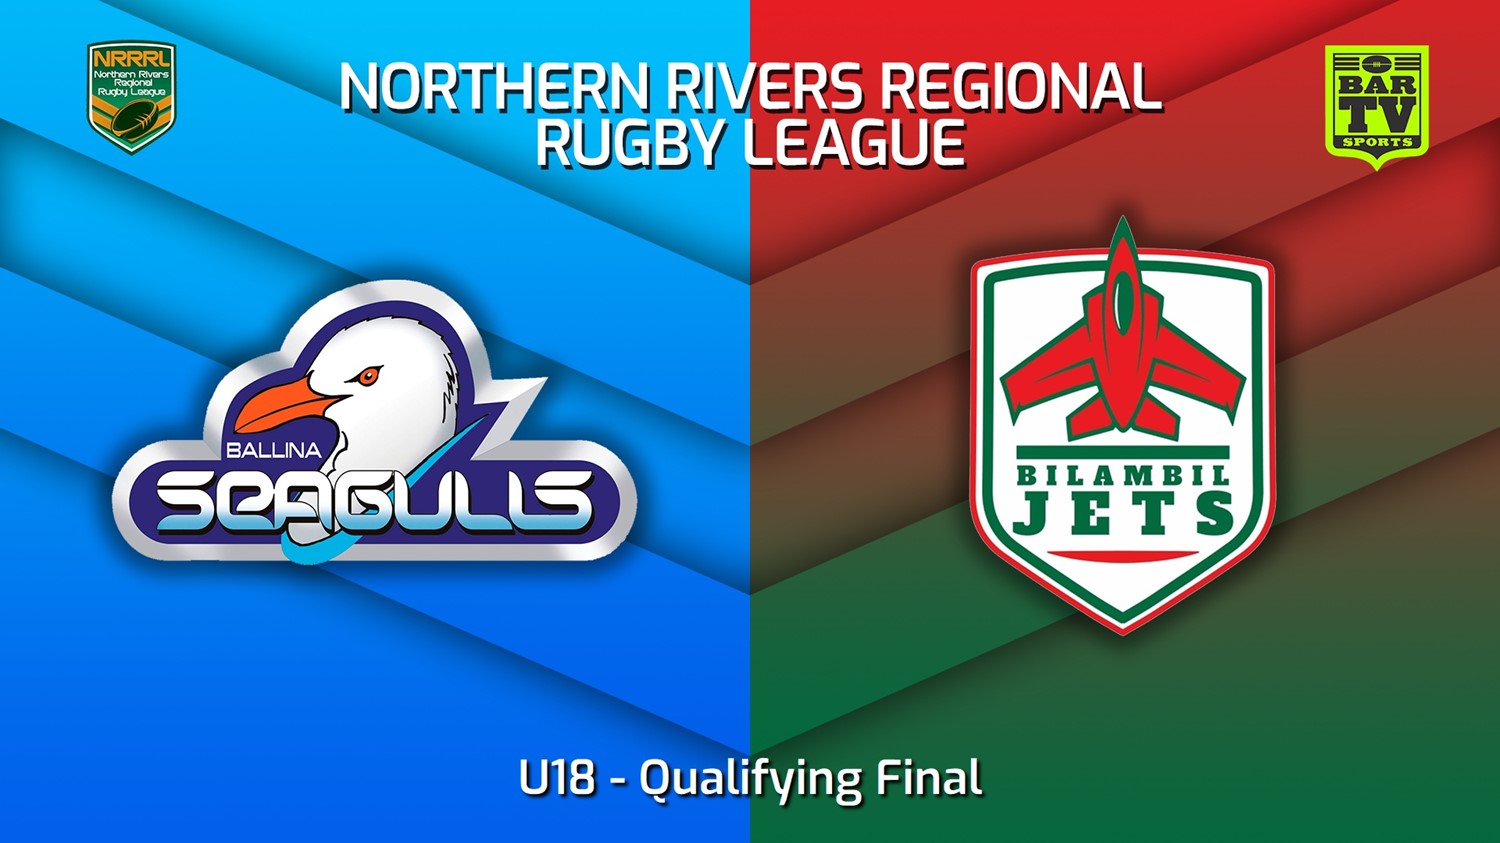 220814-Northern Rivers Qualifying Final - U18 - Ballina Seagulls v Bilambil Jets Slate Image